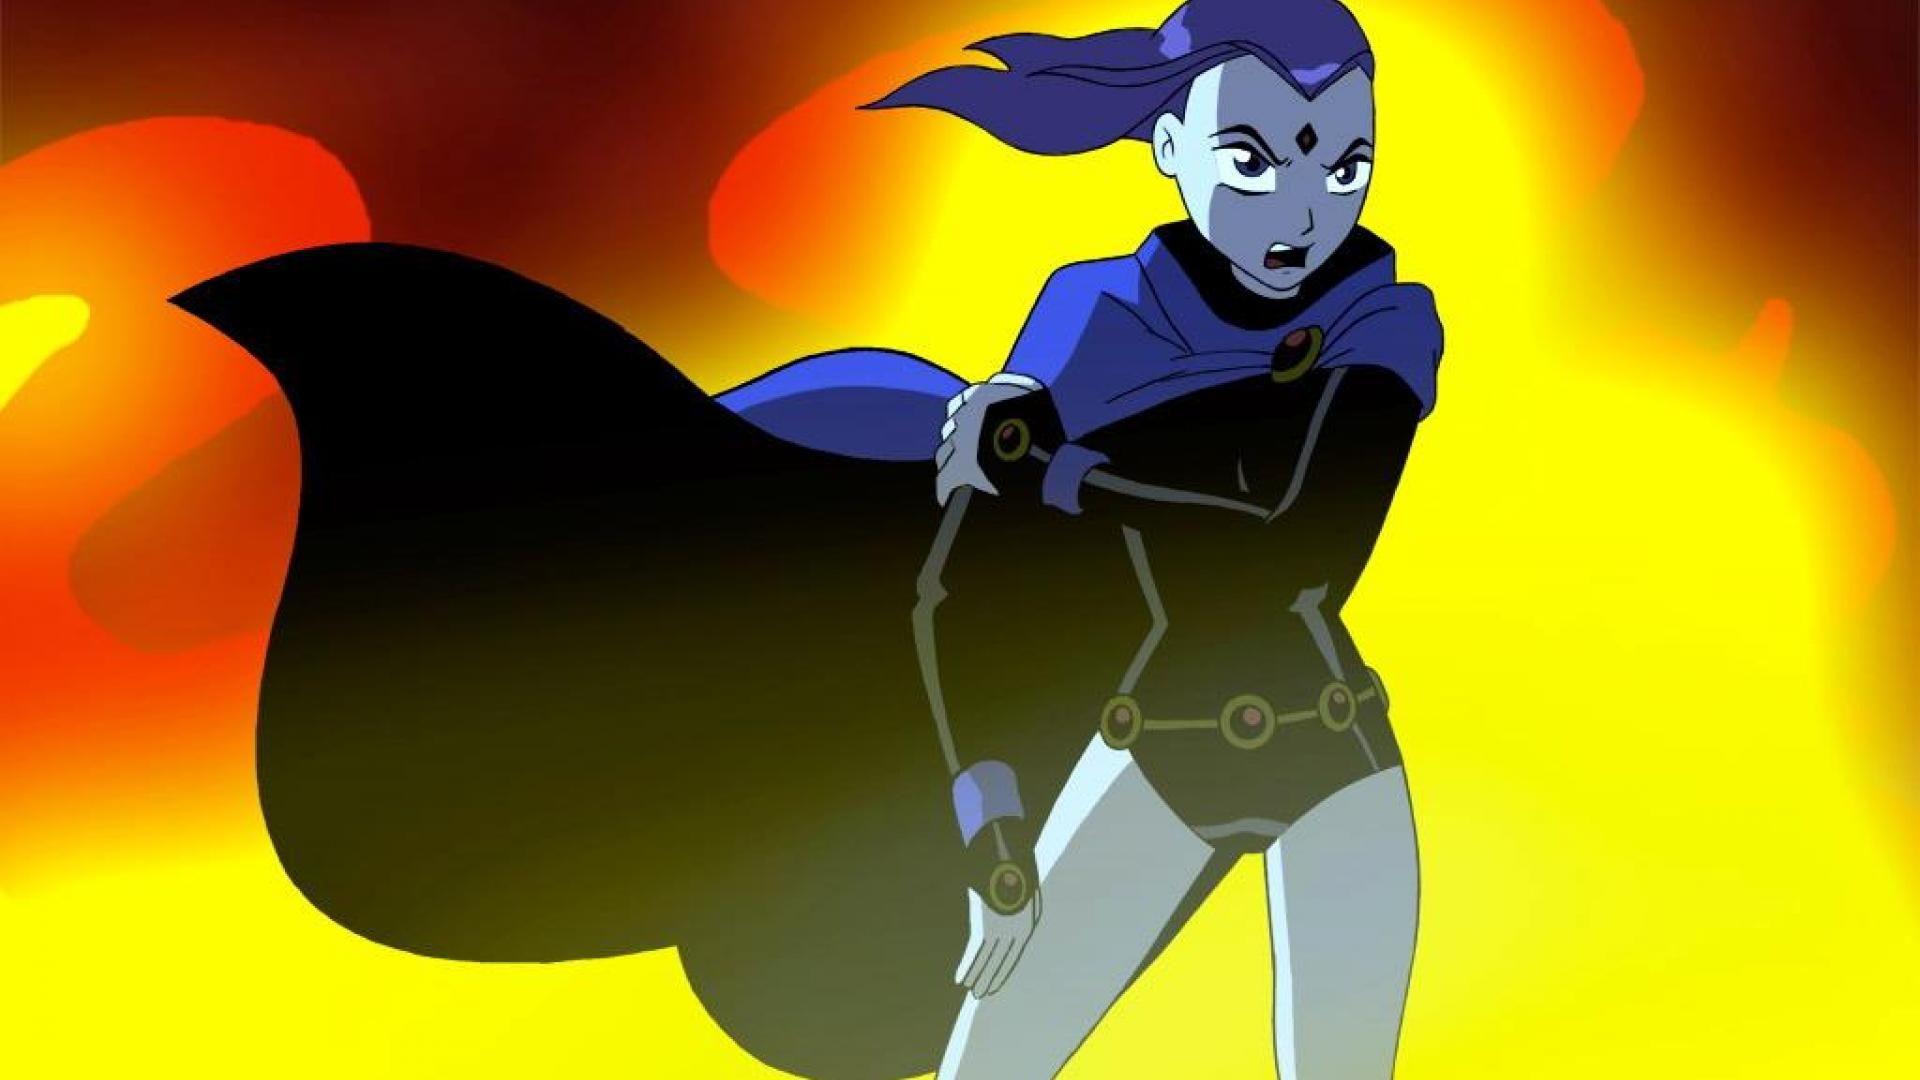 Wallpaper.wiki Raven Teen Titans Background Download Free PIC